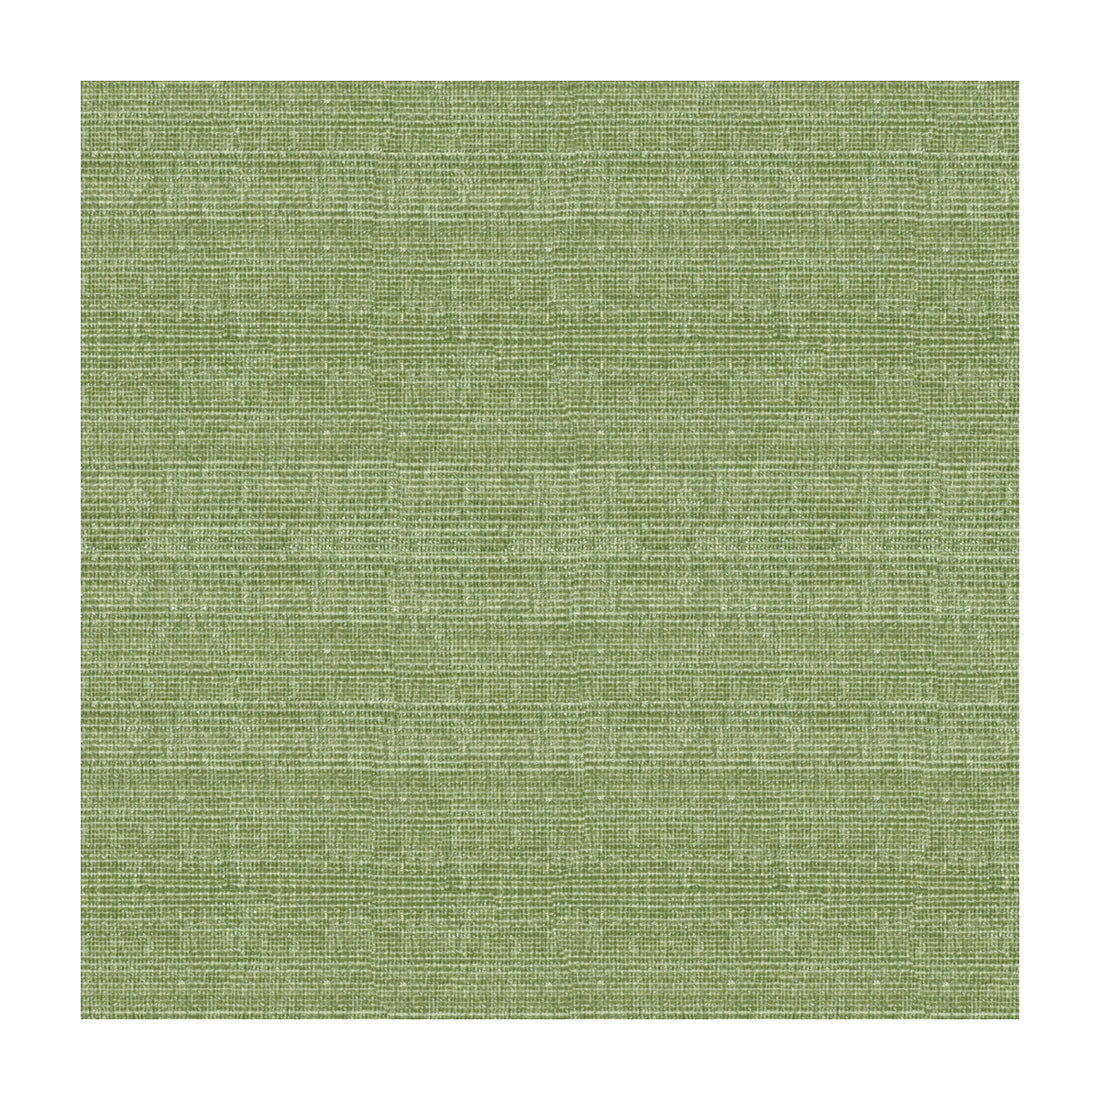 Kravet Smart fabric in 34191-3 color - pattern 34191.3.0 - by Kravet Smart